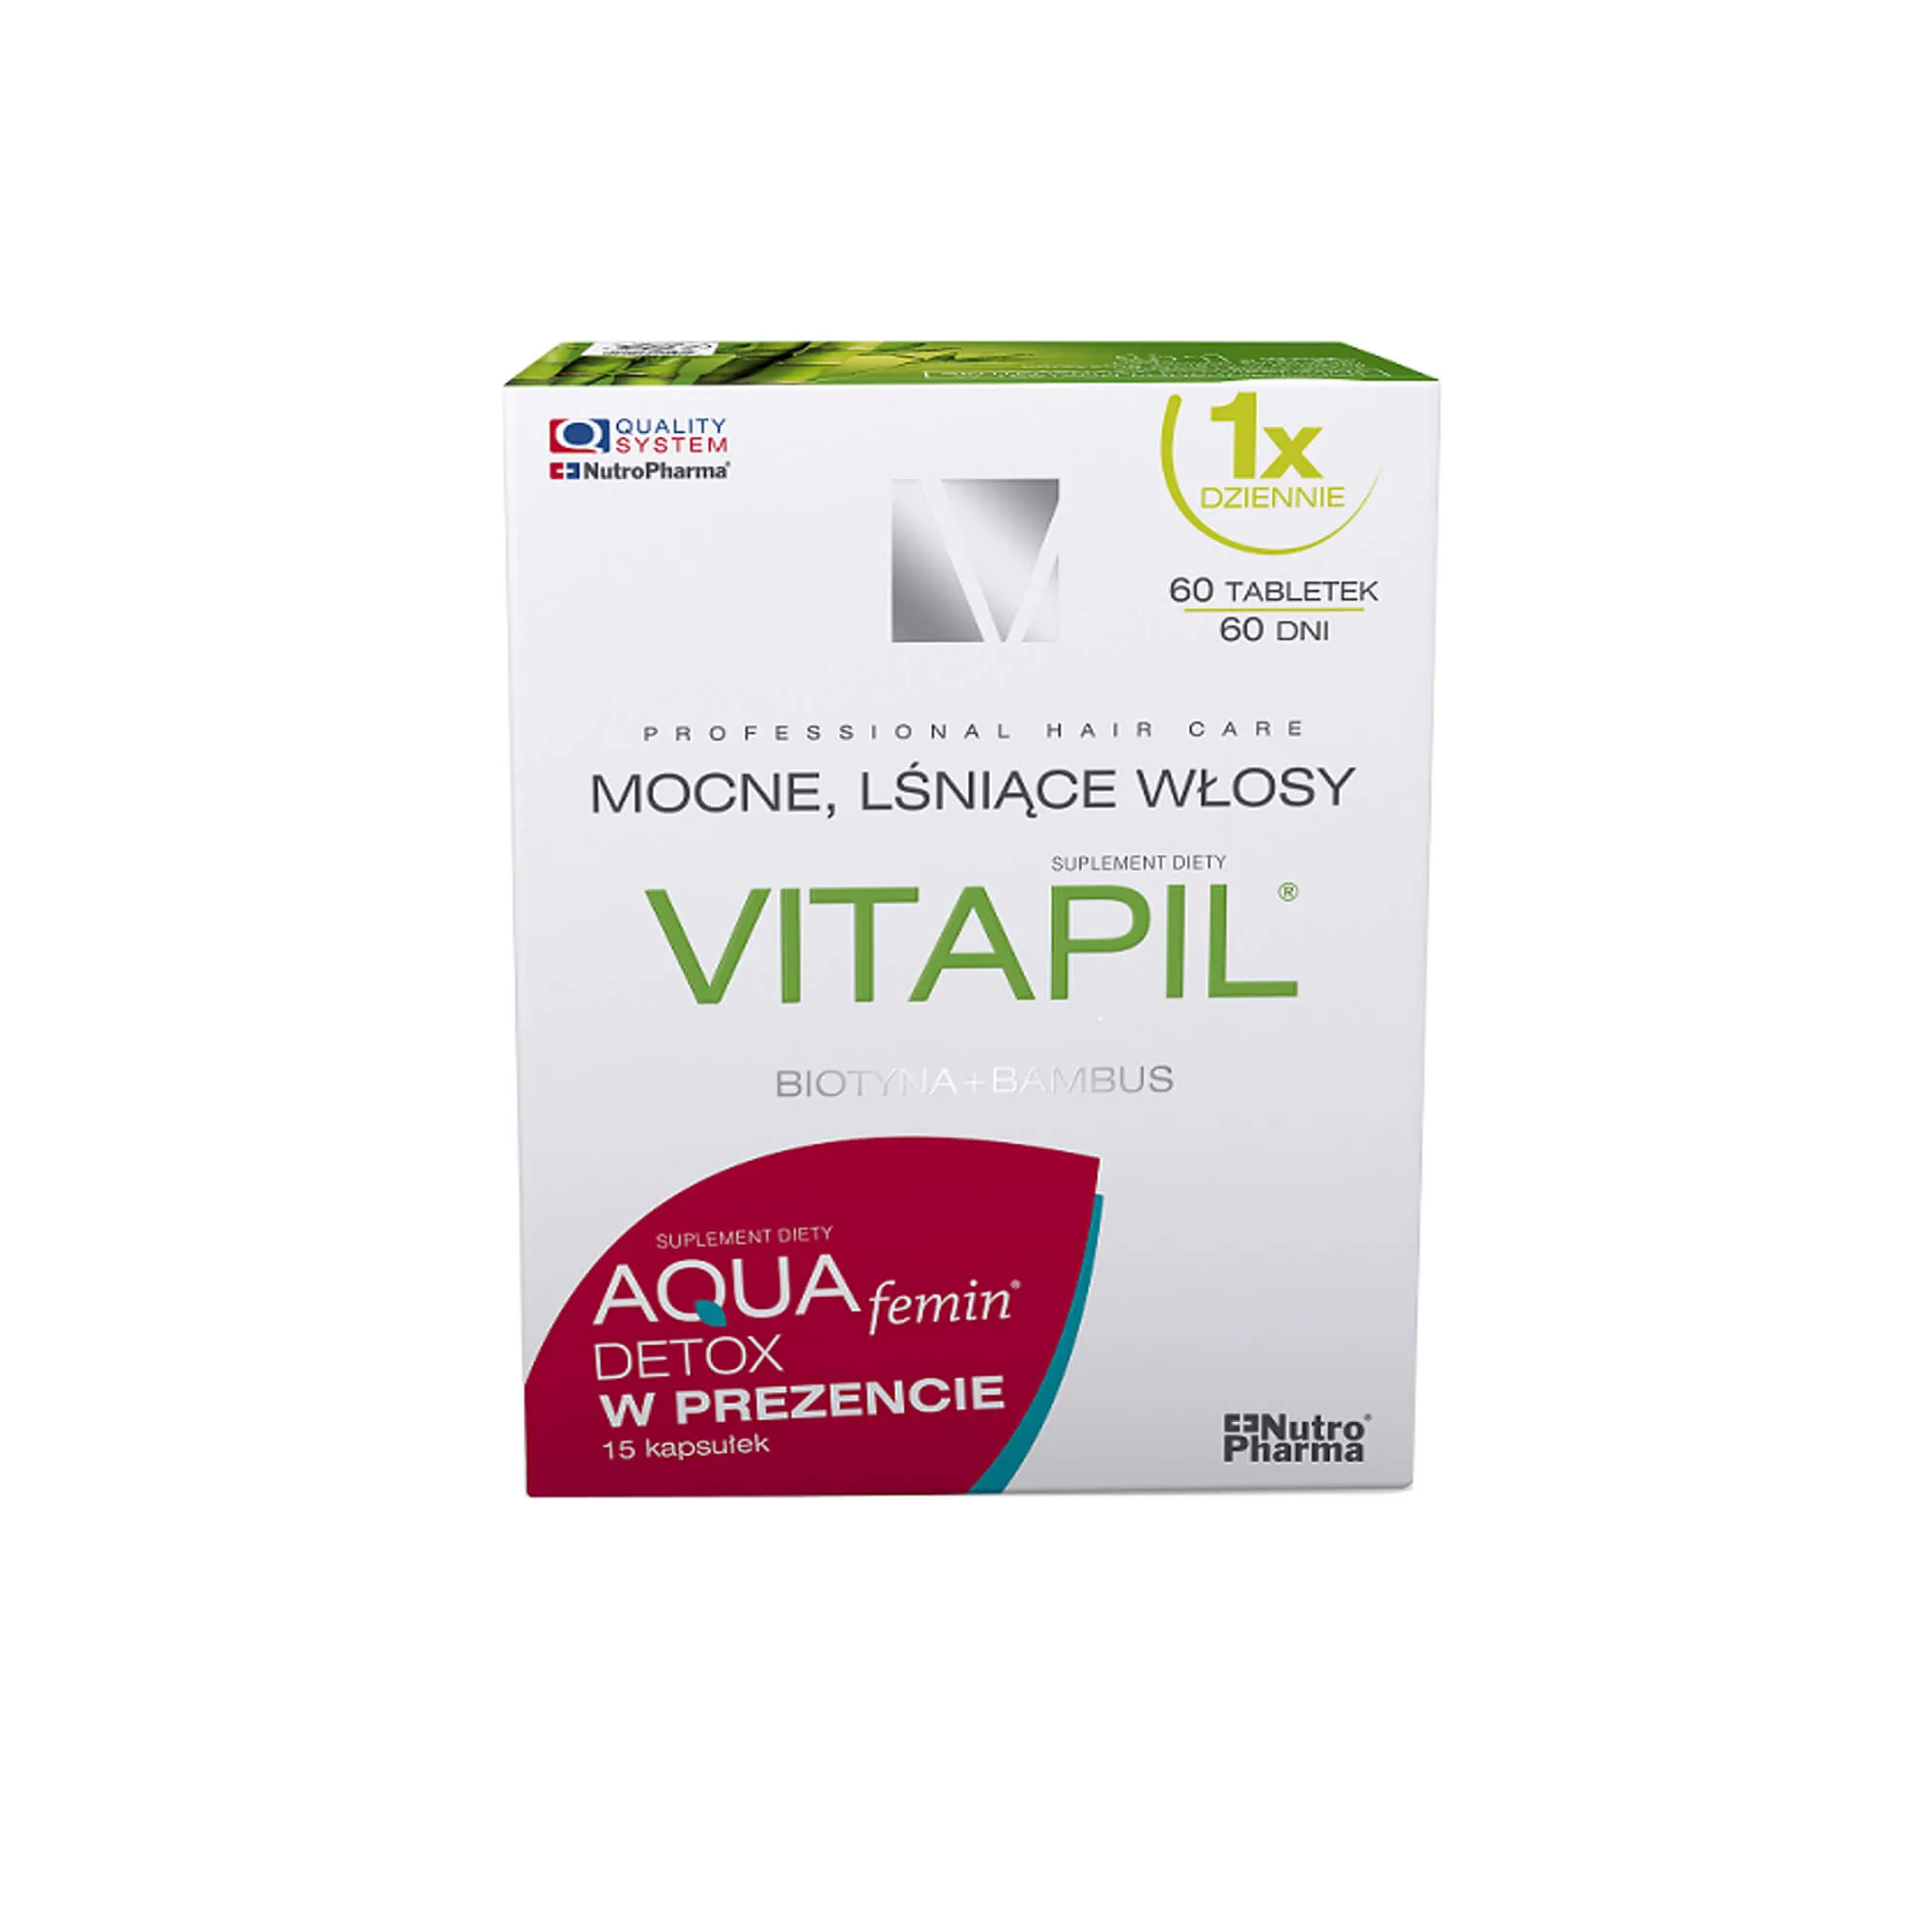 Vitapil + Aqua Femin, suplement diety, 60 tabletek + 15 kapsułek